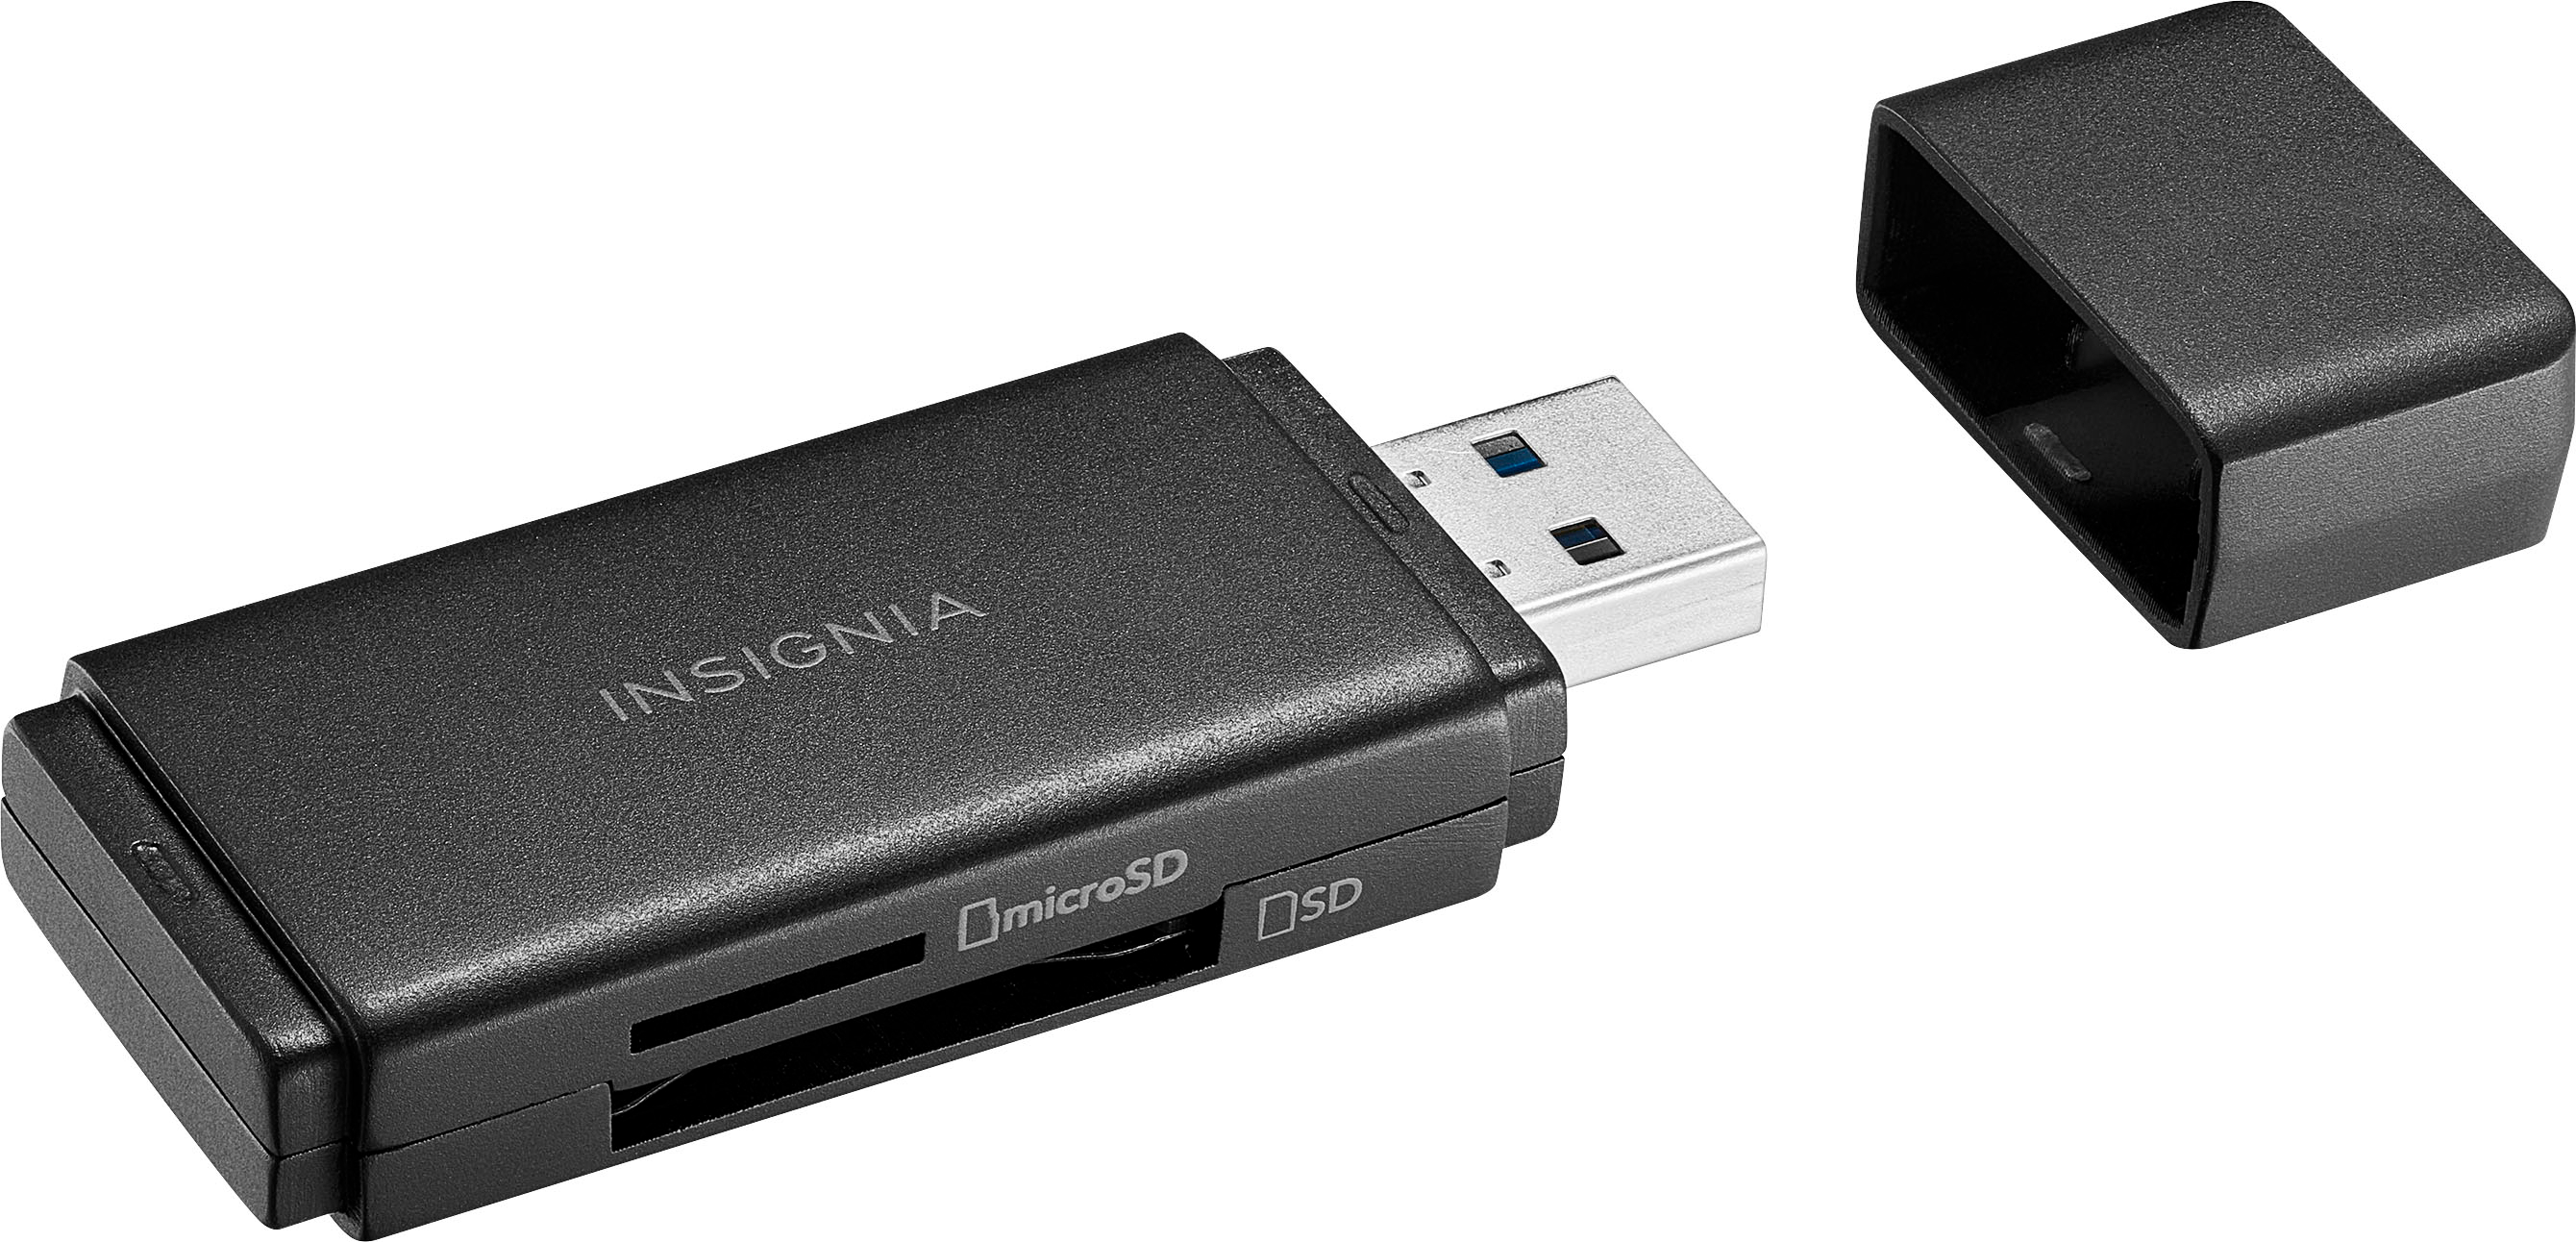 Insignia - USB 3.0 SD and microSD Memory Card Reader - Black